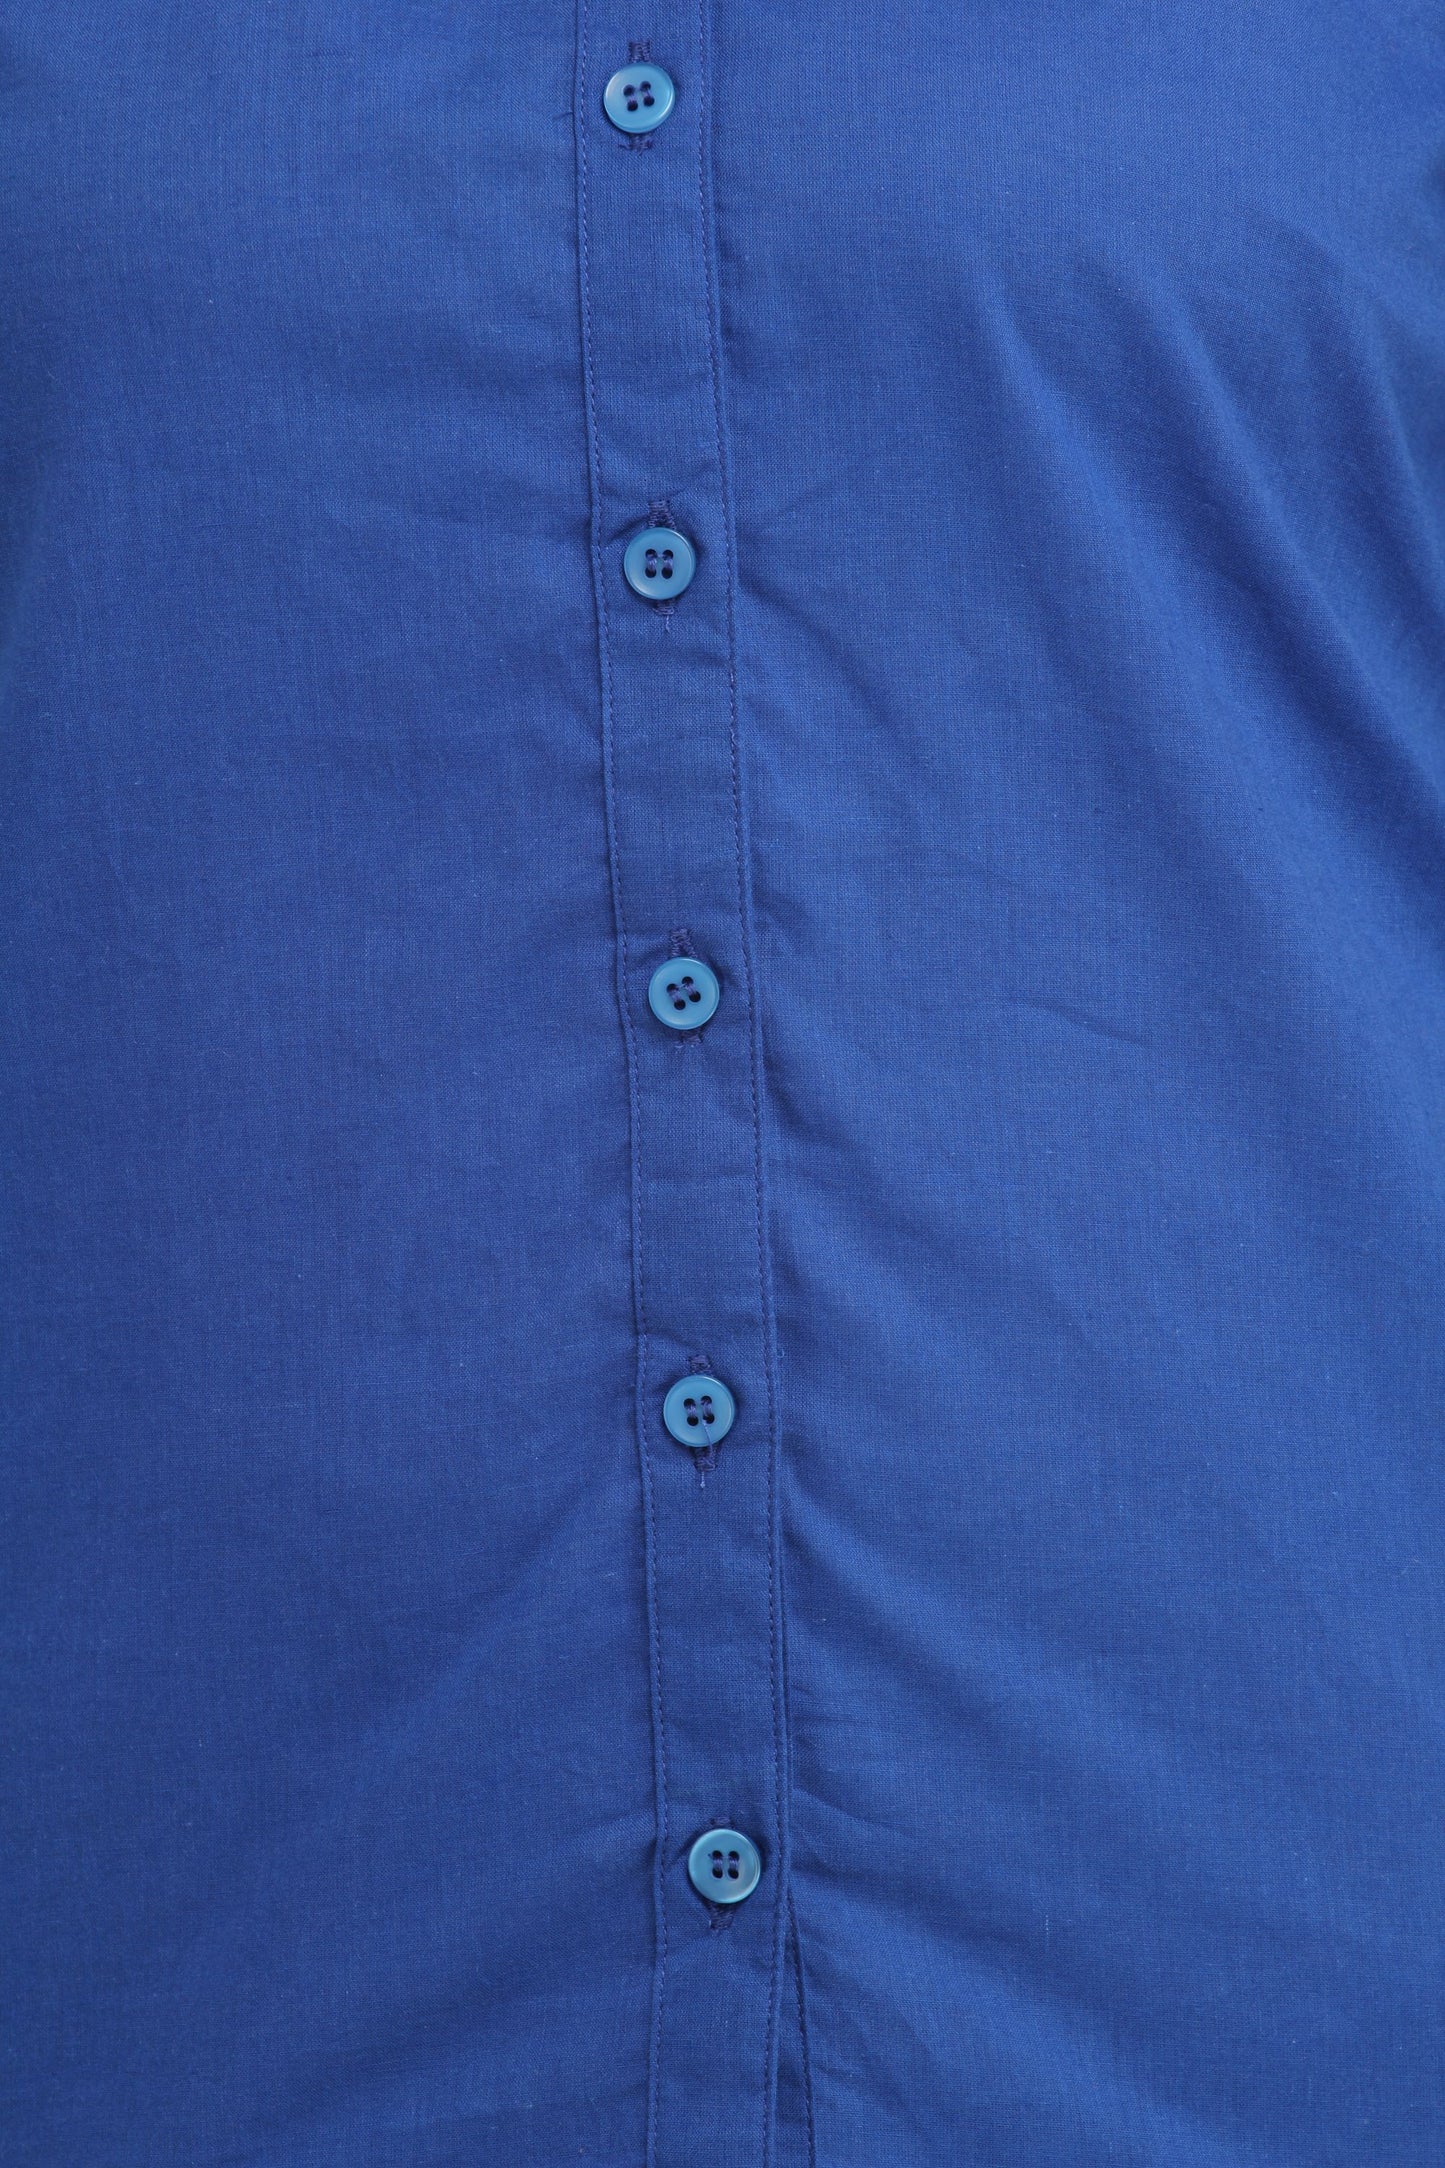 Blue Solid Shirt